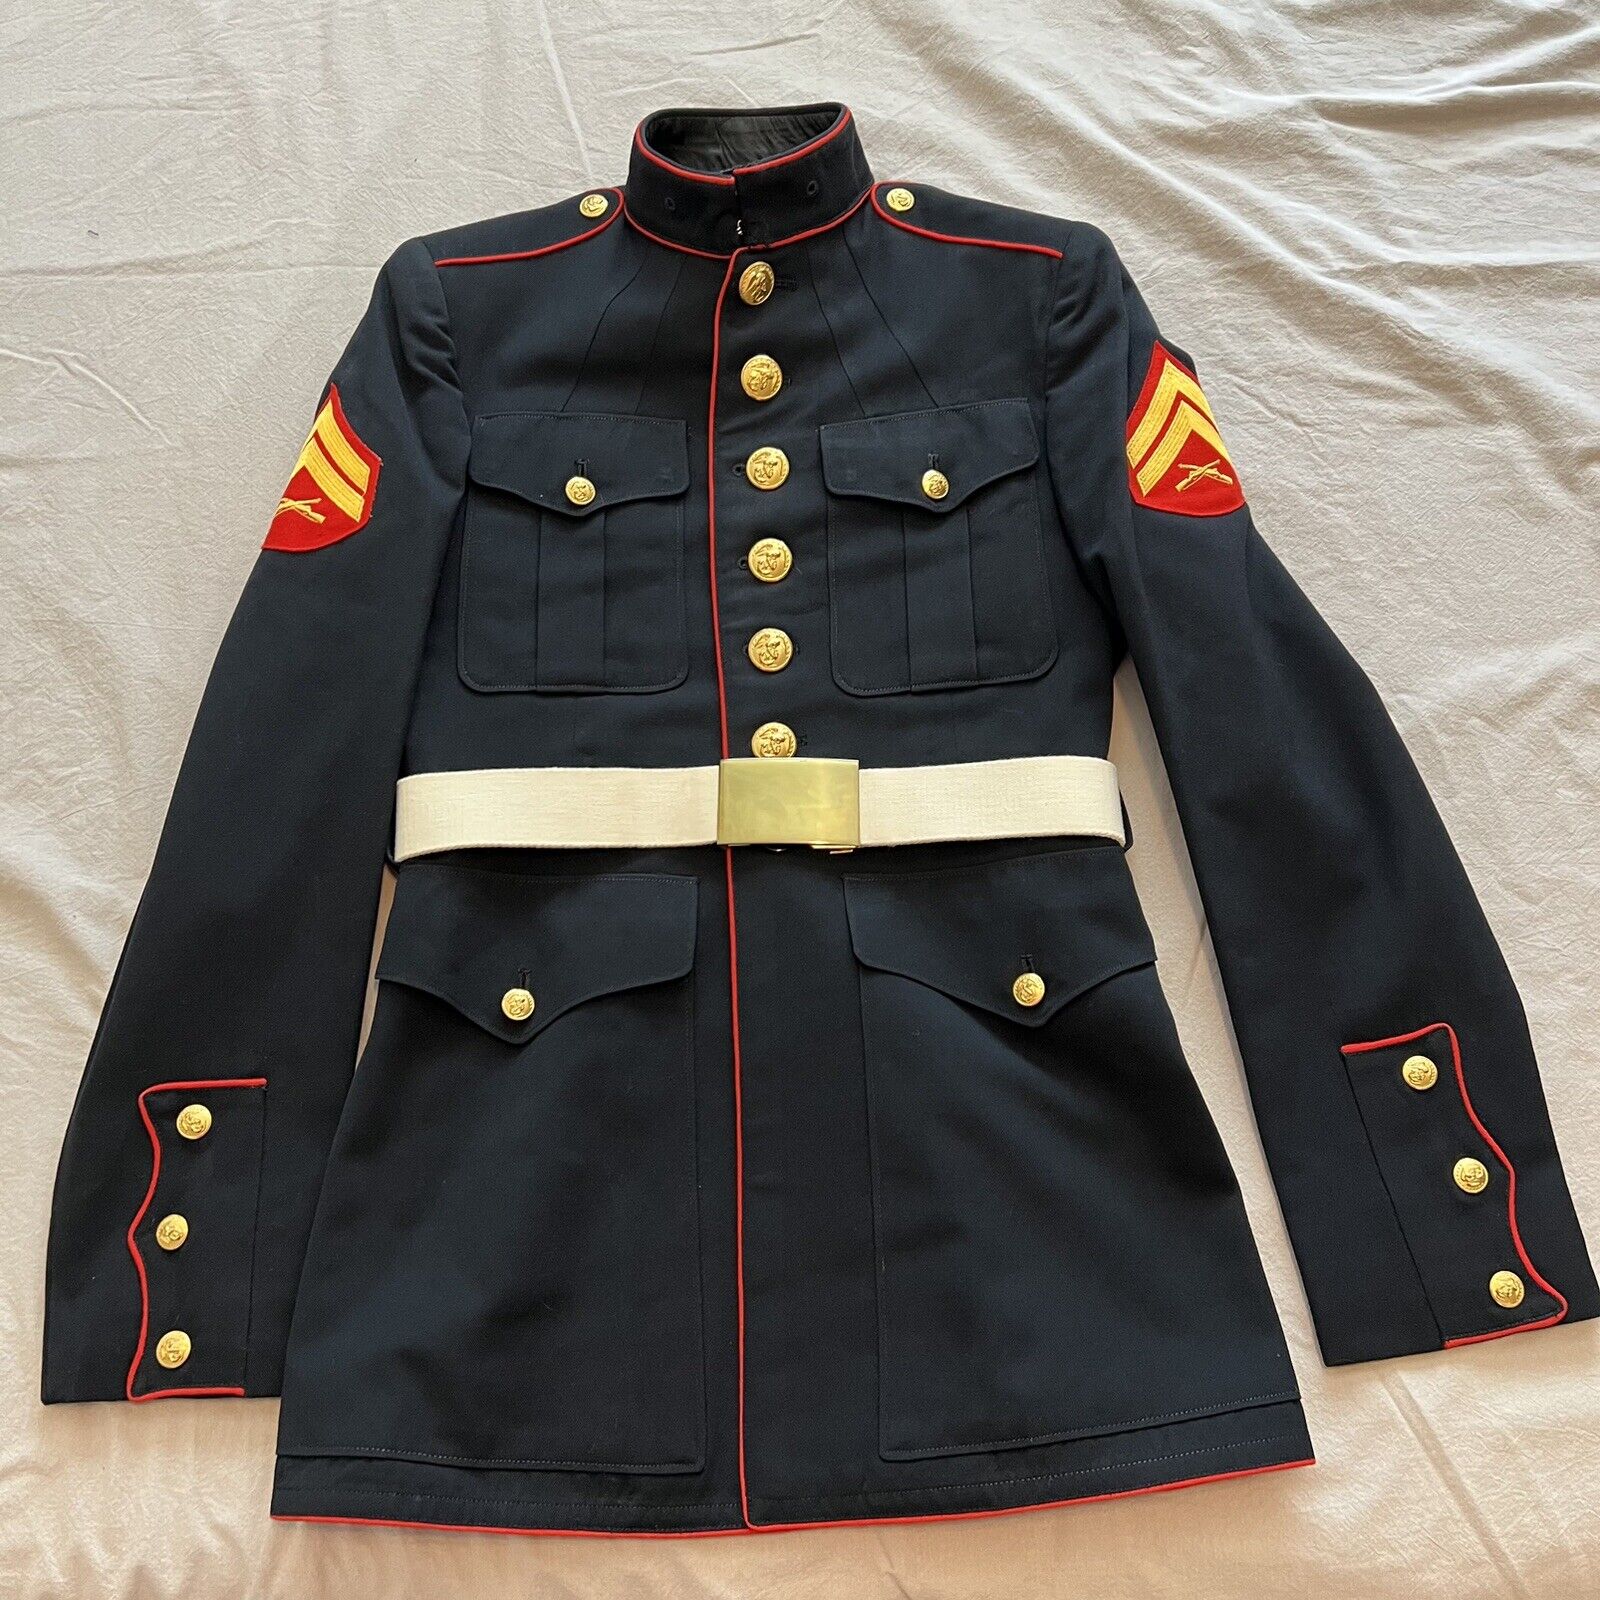 Genuine USMC U.S. Marine Corps Dress Blues Jacket Top With LCPL Patch